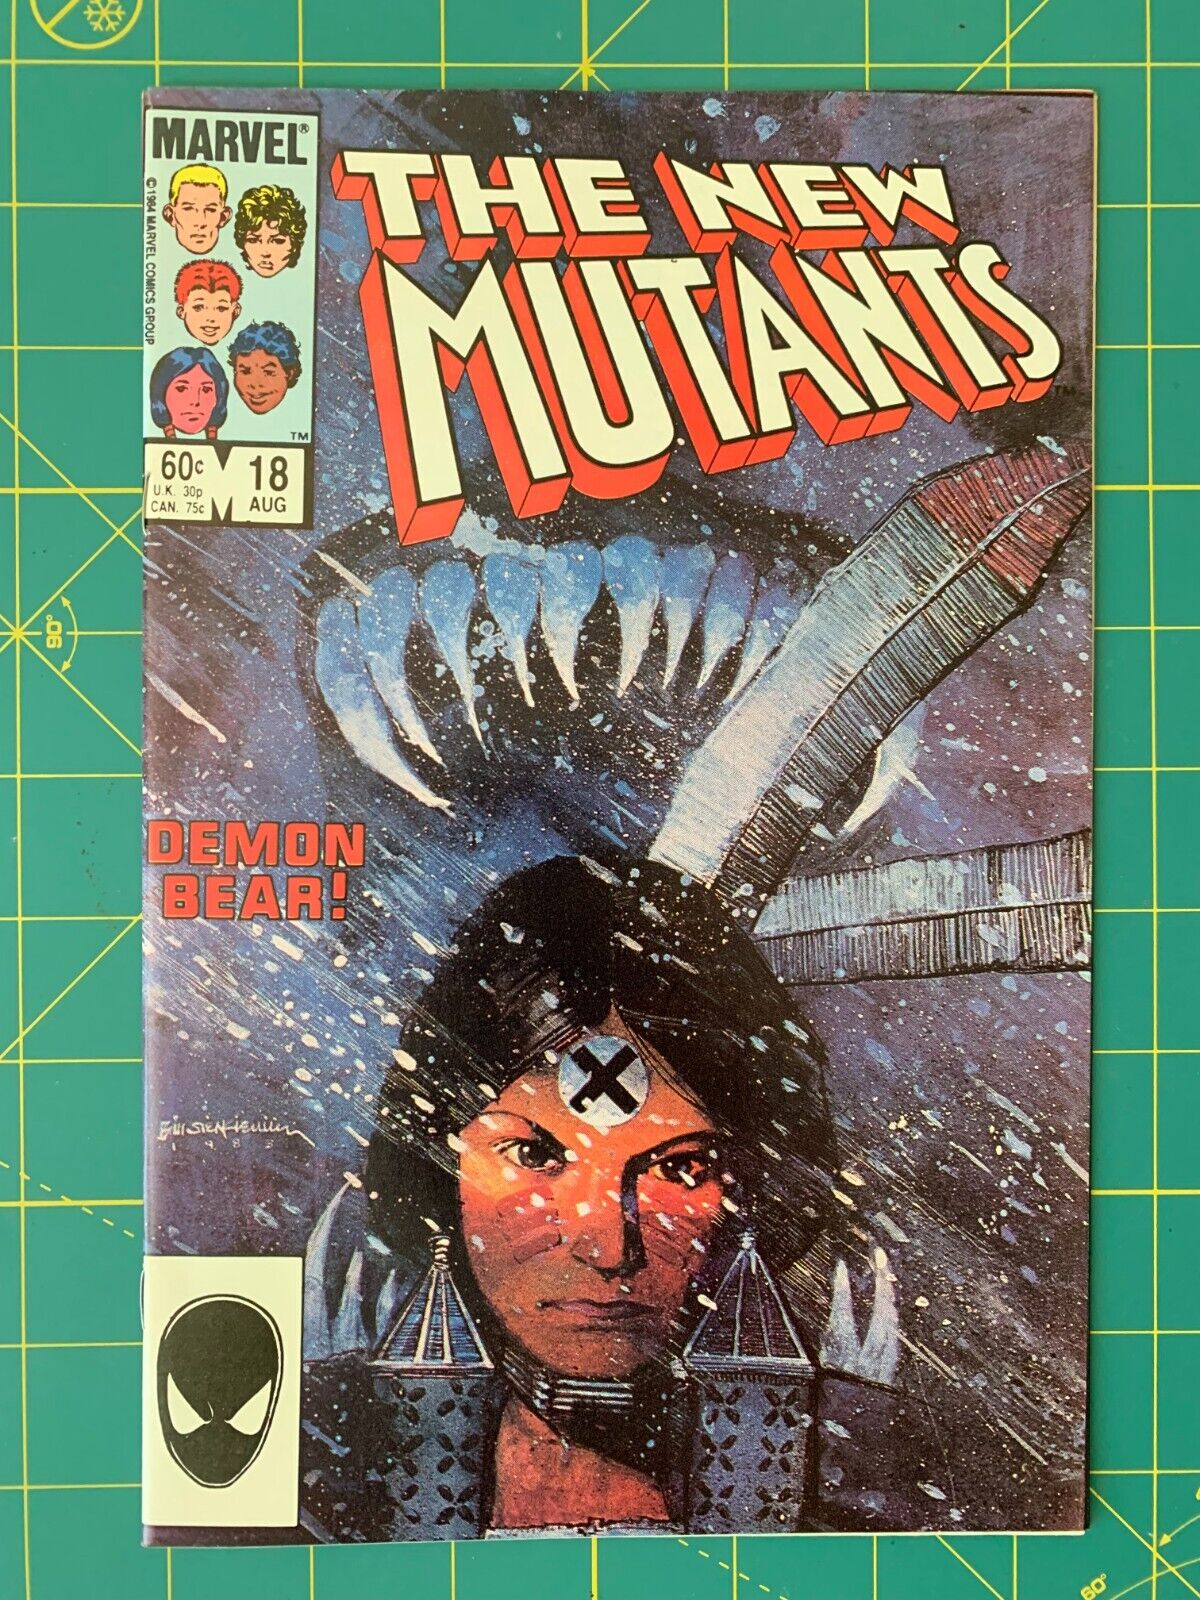 New Mutants #18 - Aug 1984 - Vol.1 - Direct Edition - Major Key - (8264)